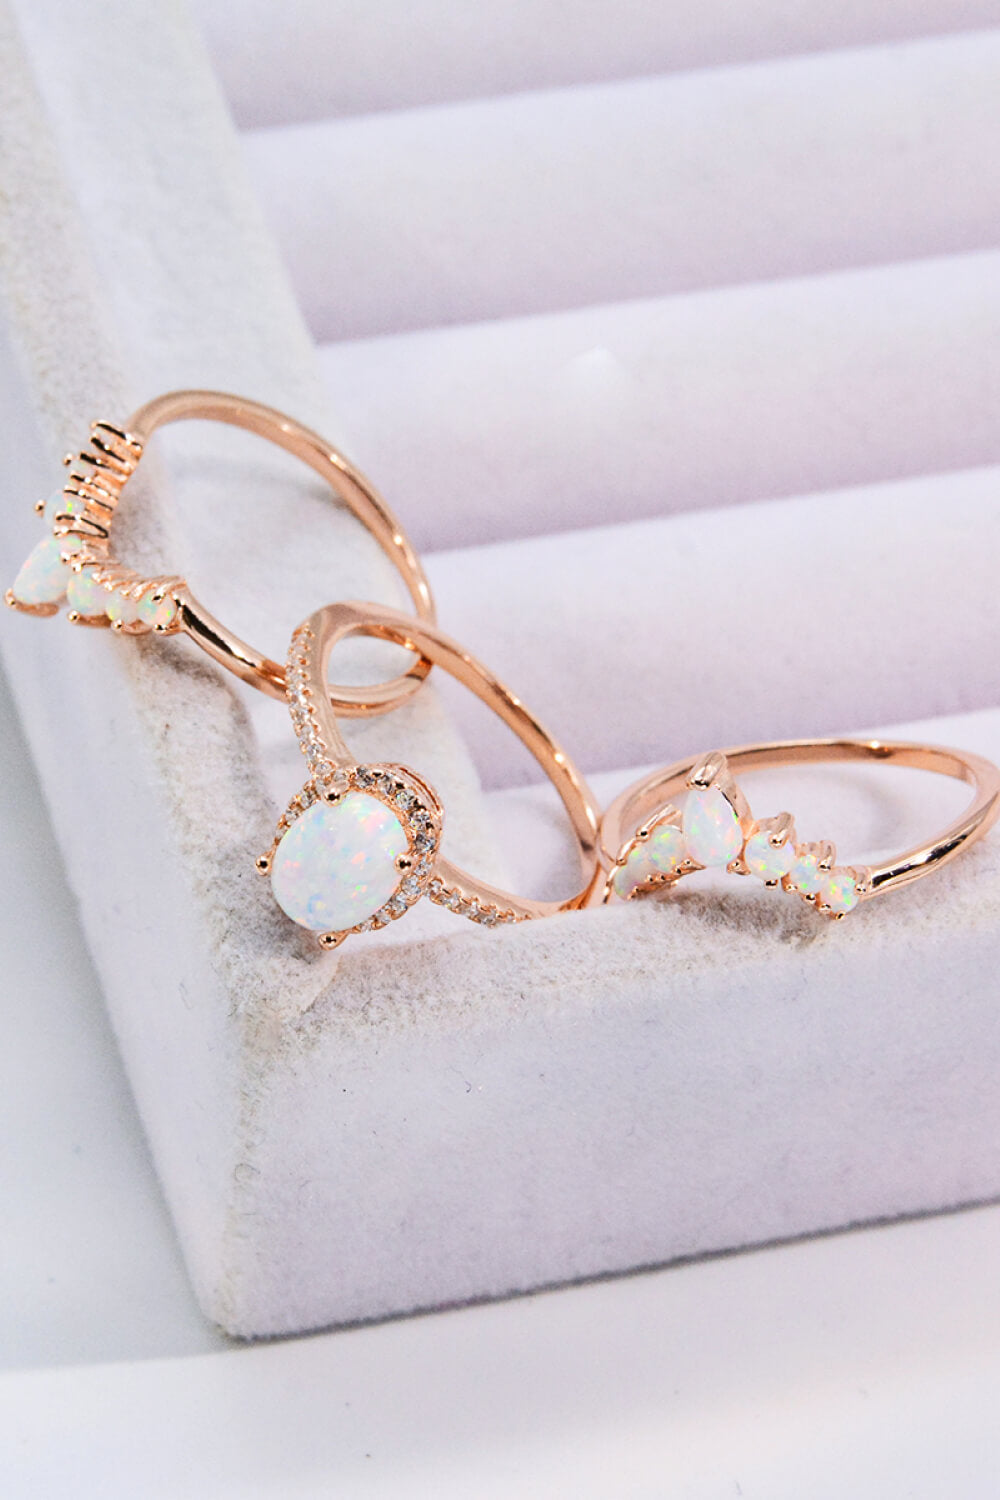 Opal and Zircon Three-Piece Ring Set